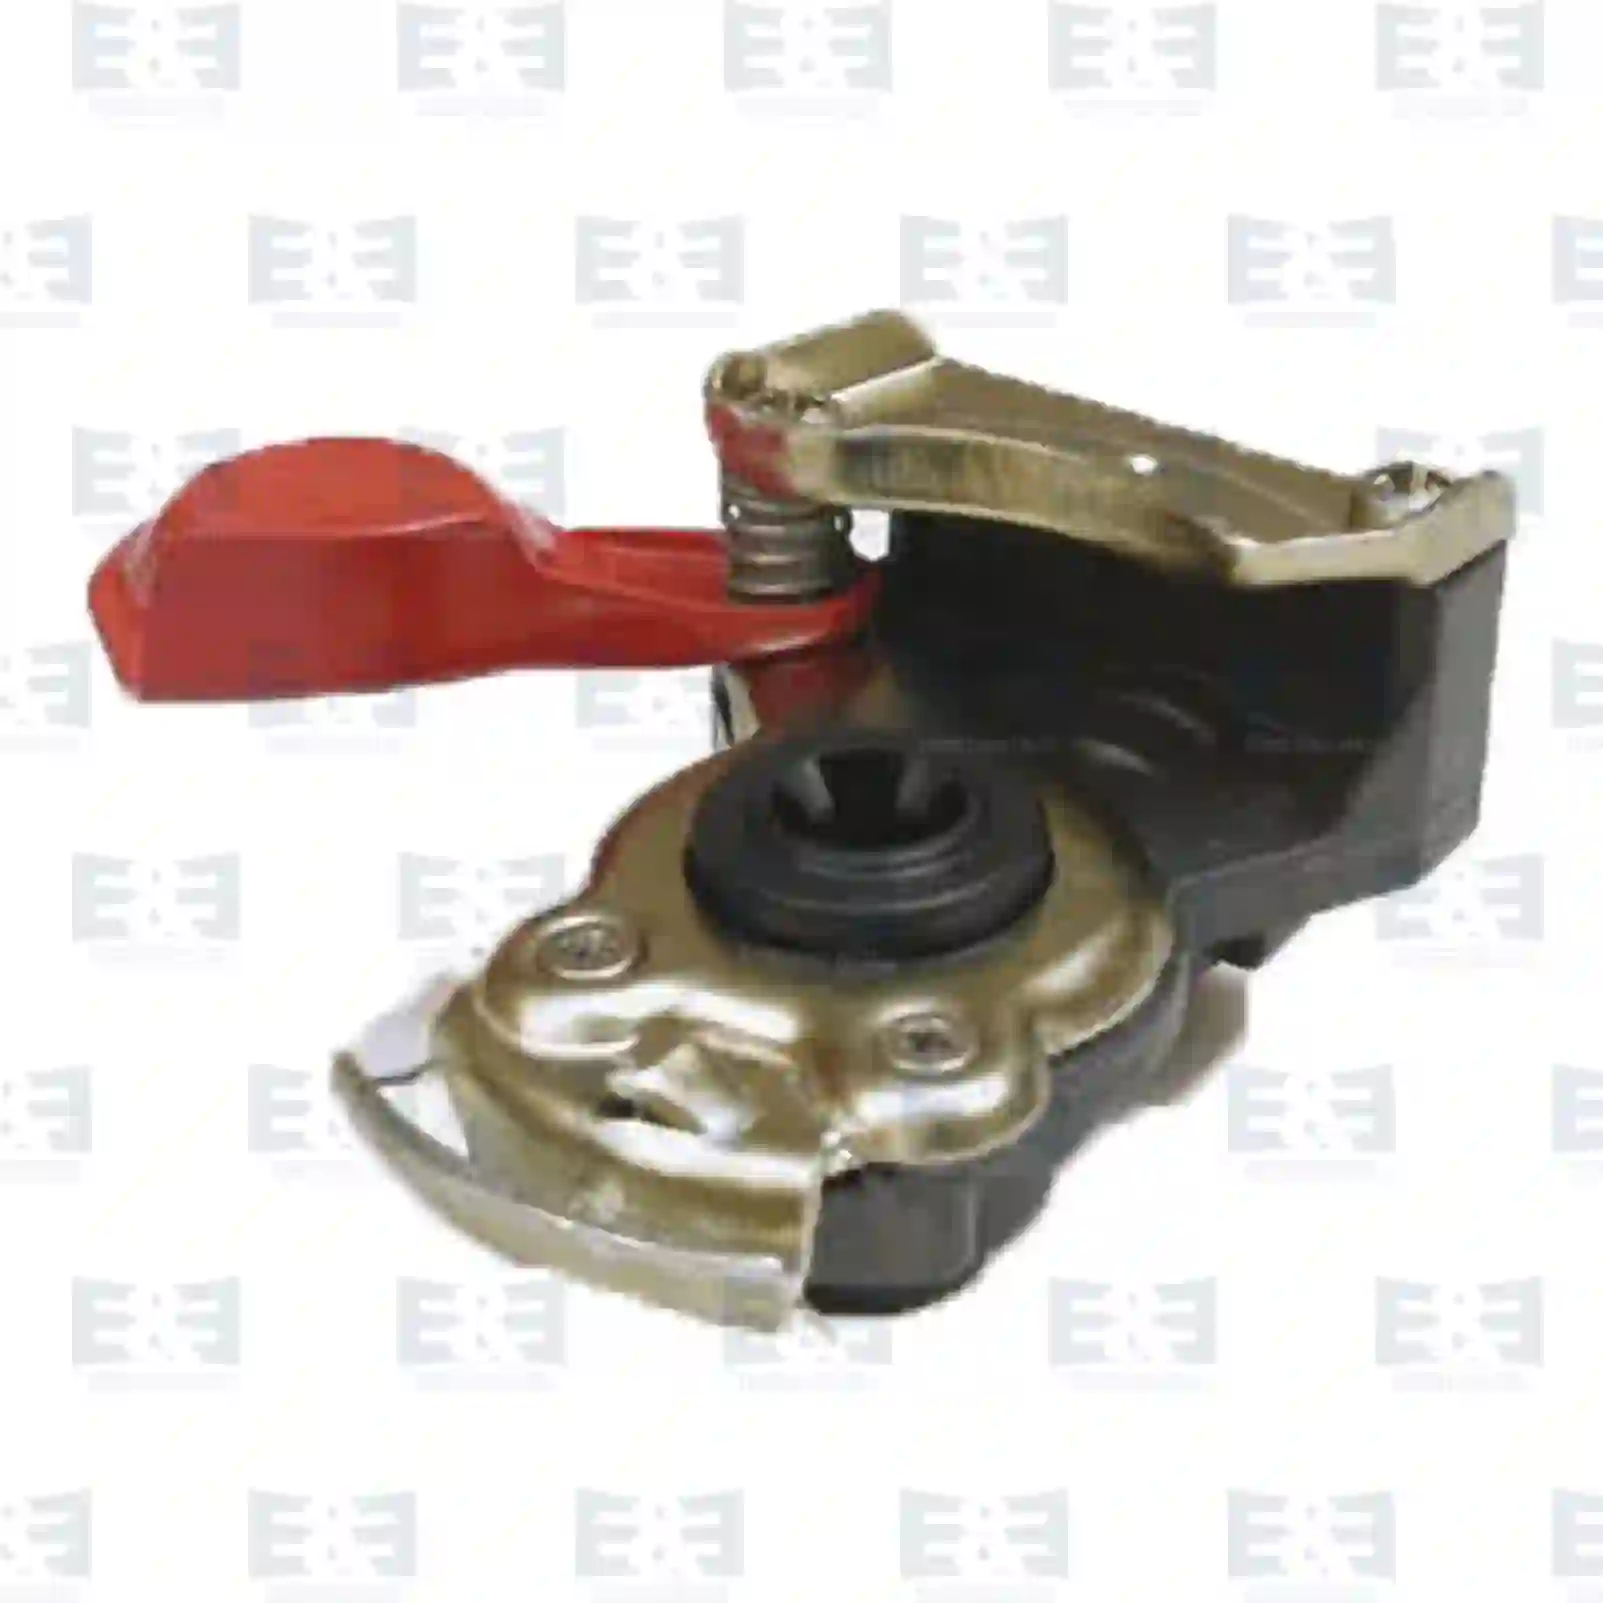  Palm coupling, automatic shutter, red lid || E&E Truck Spare Parts | Truck Spare Parts, Auotomotive Spare Parts